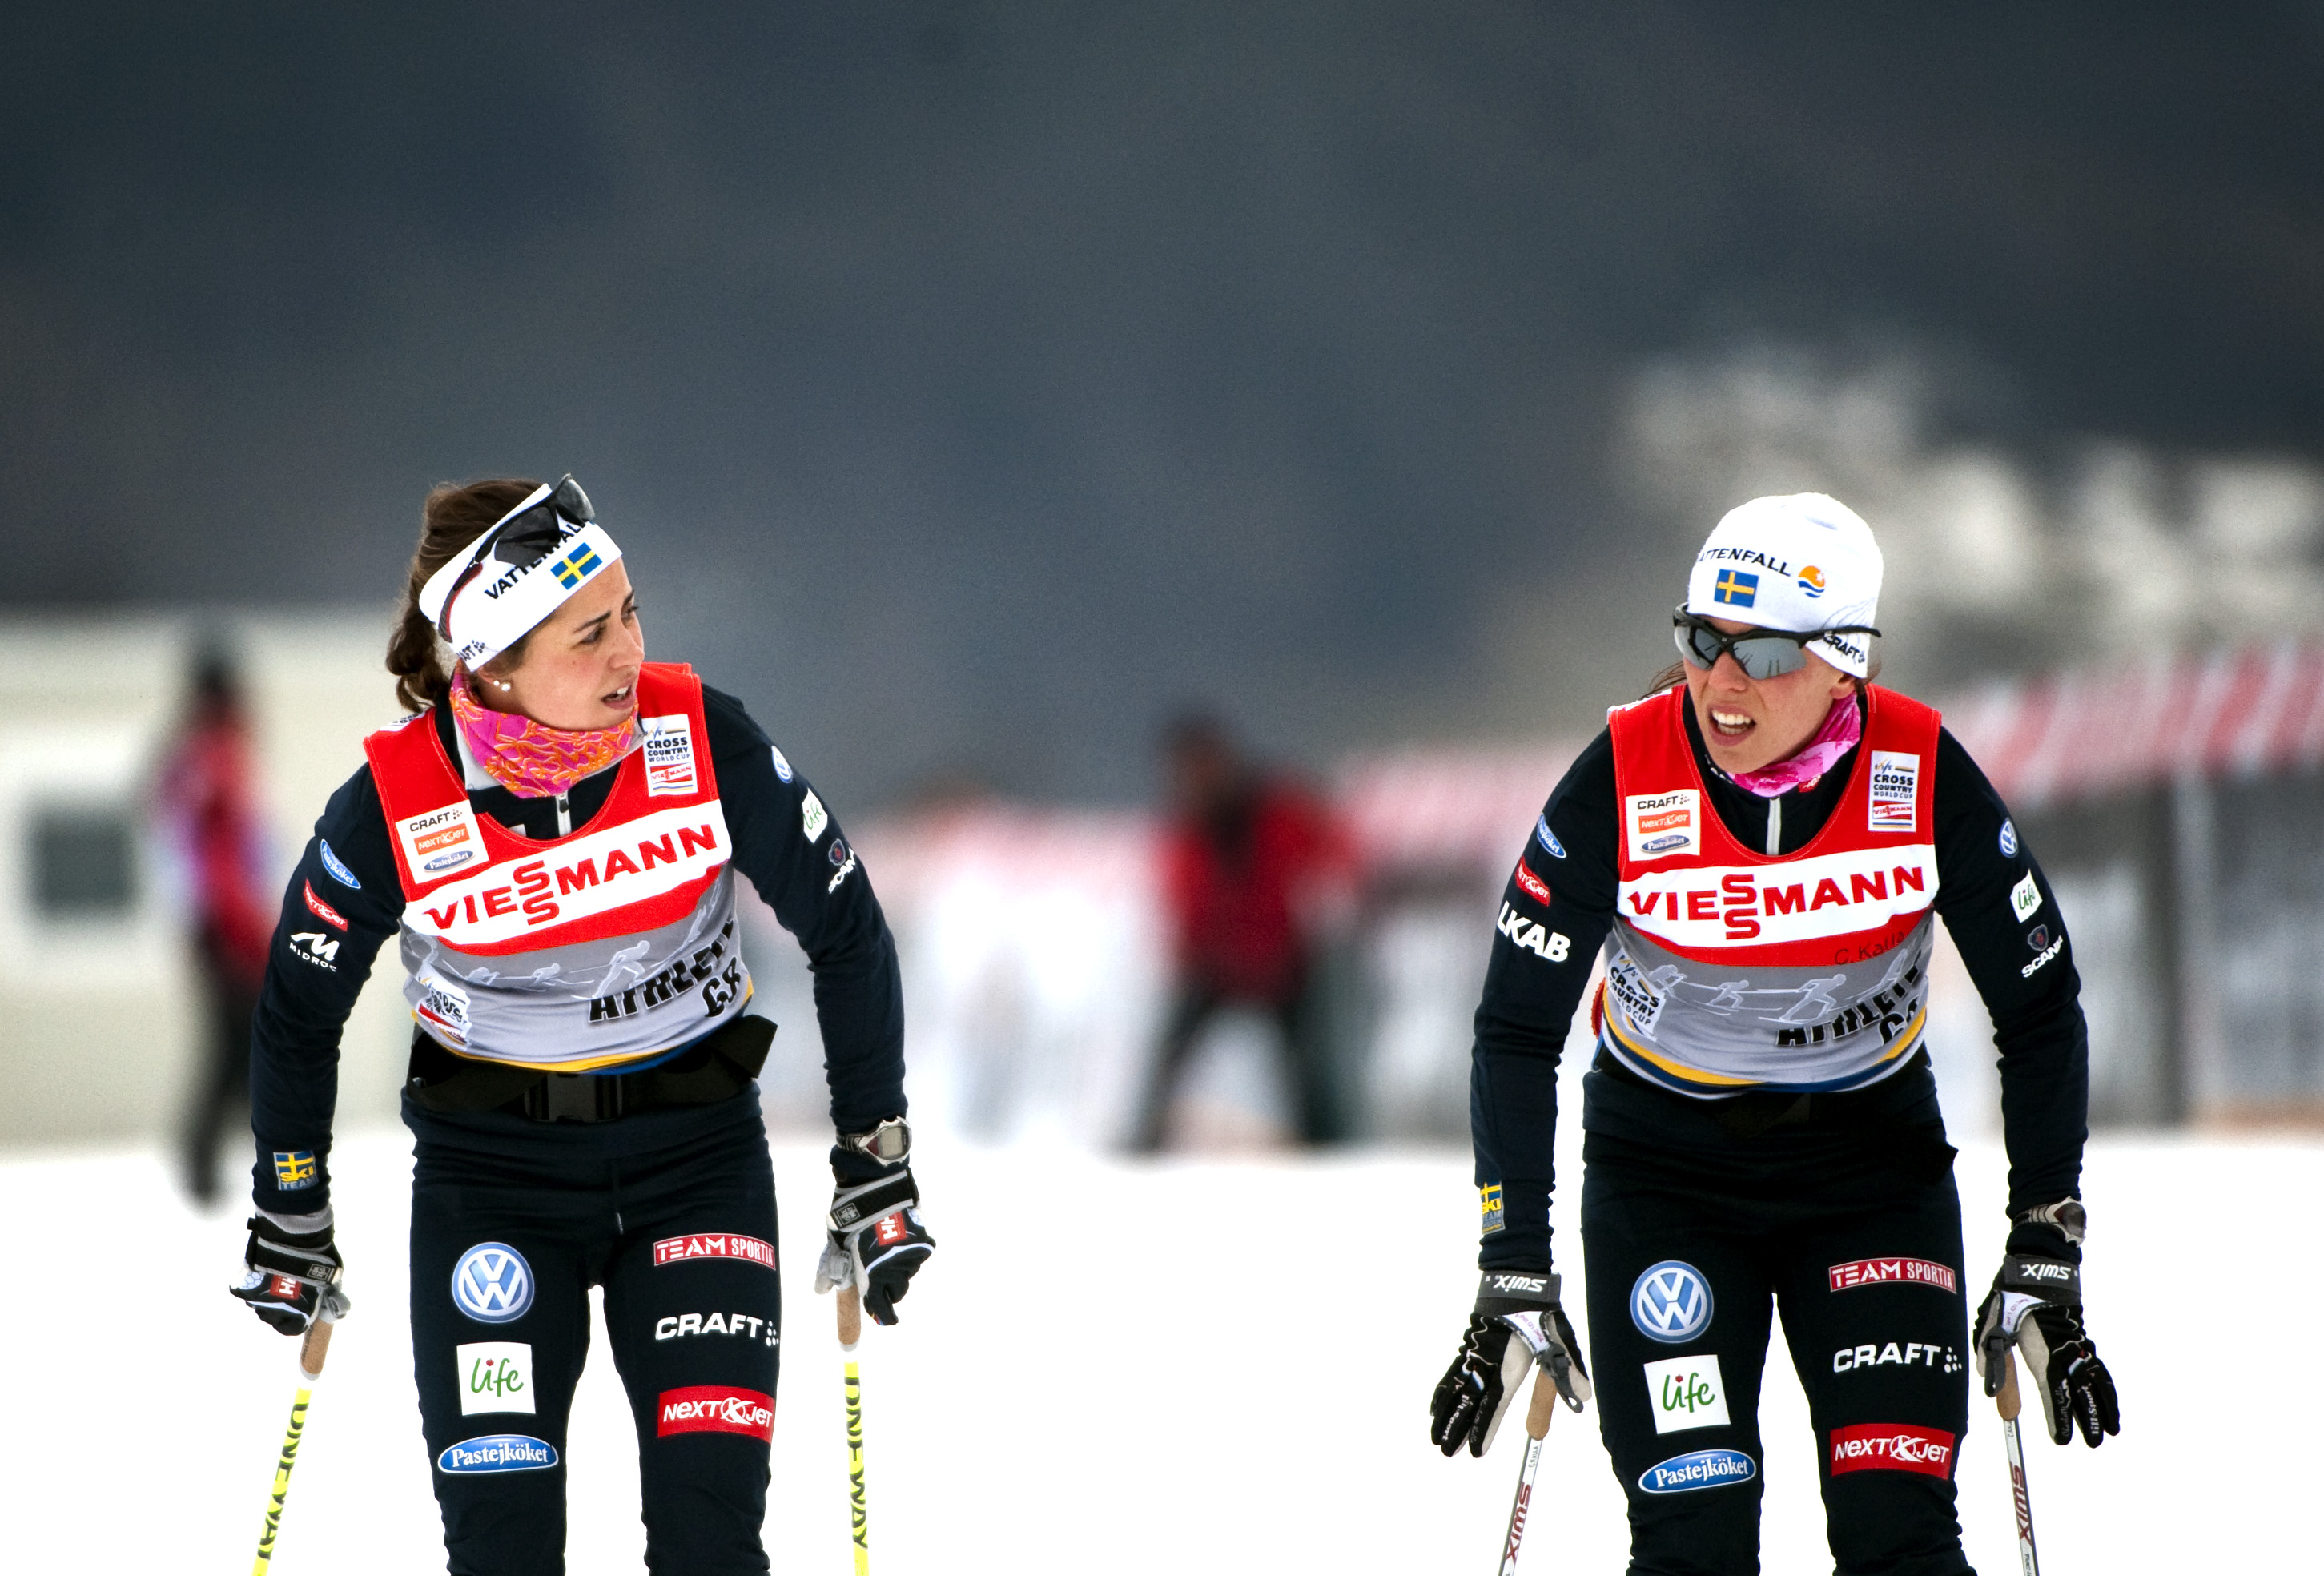 Tour de Ski, skidor, Langdskidakning, Charlotte Kalla, Anna Haag